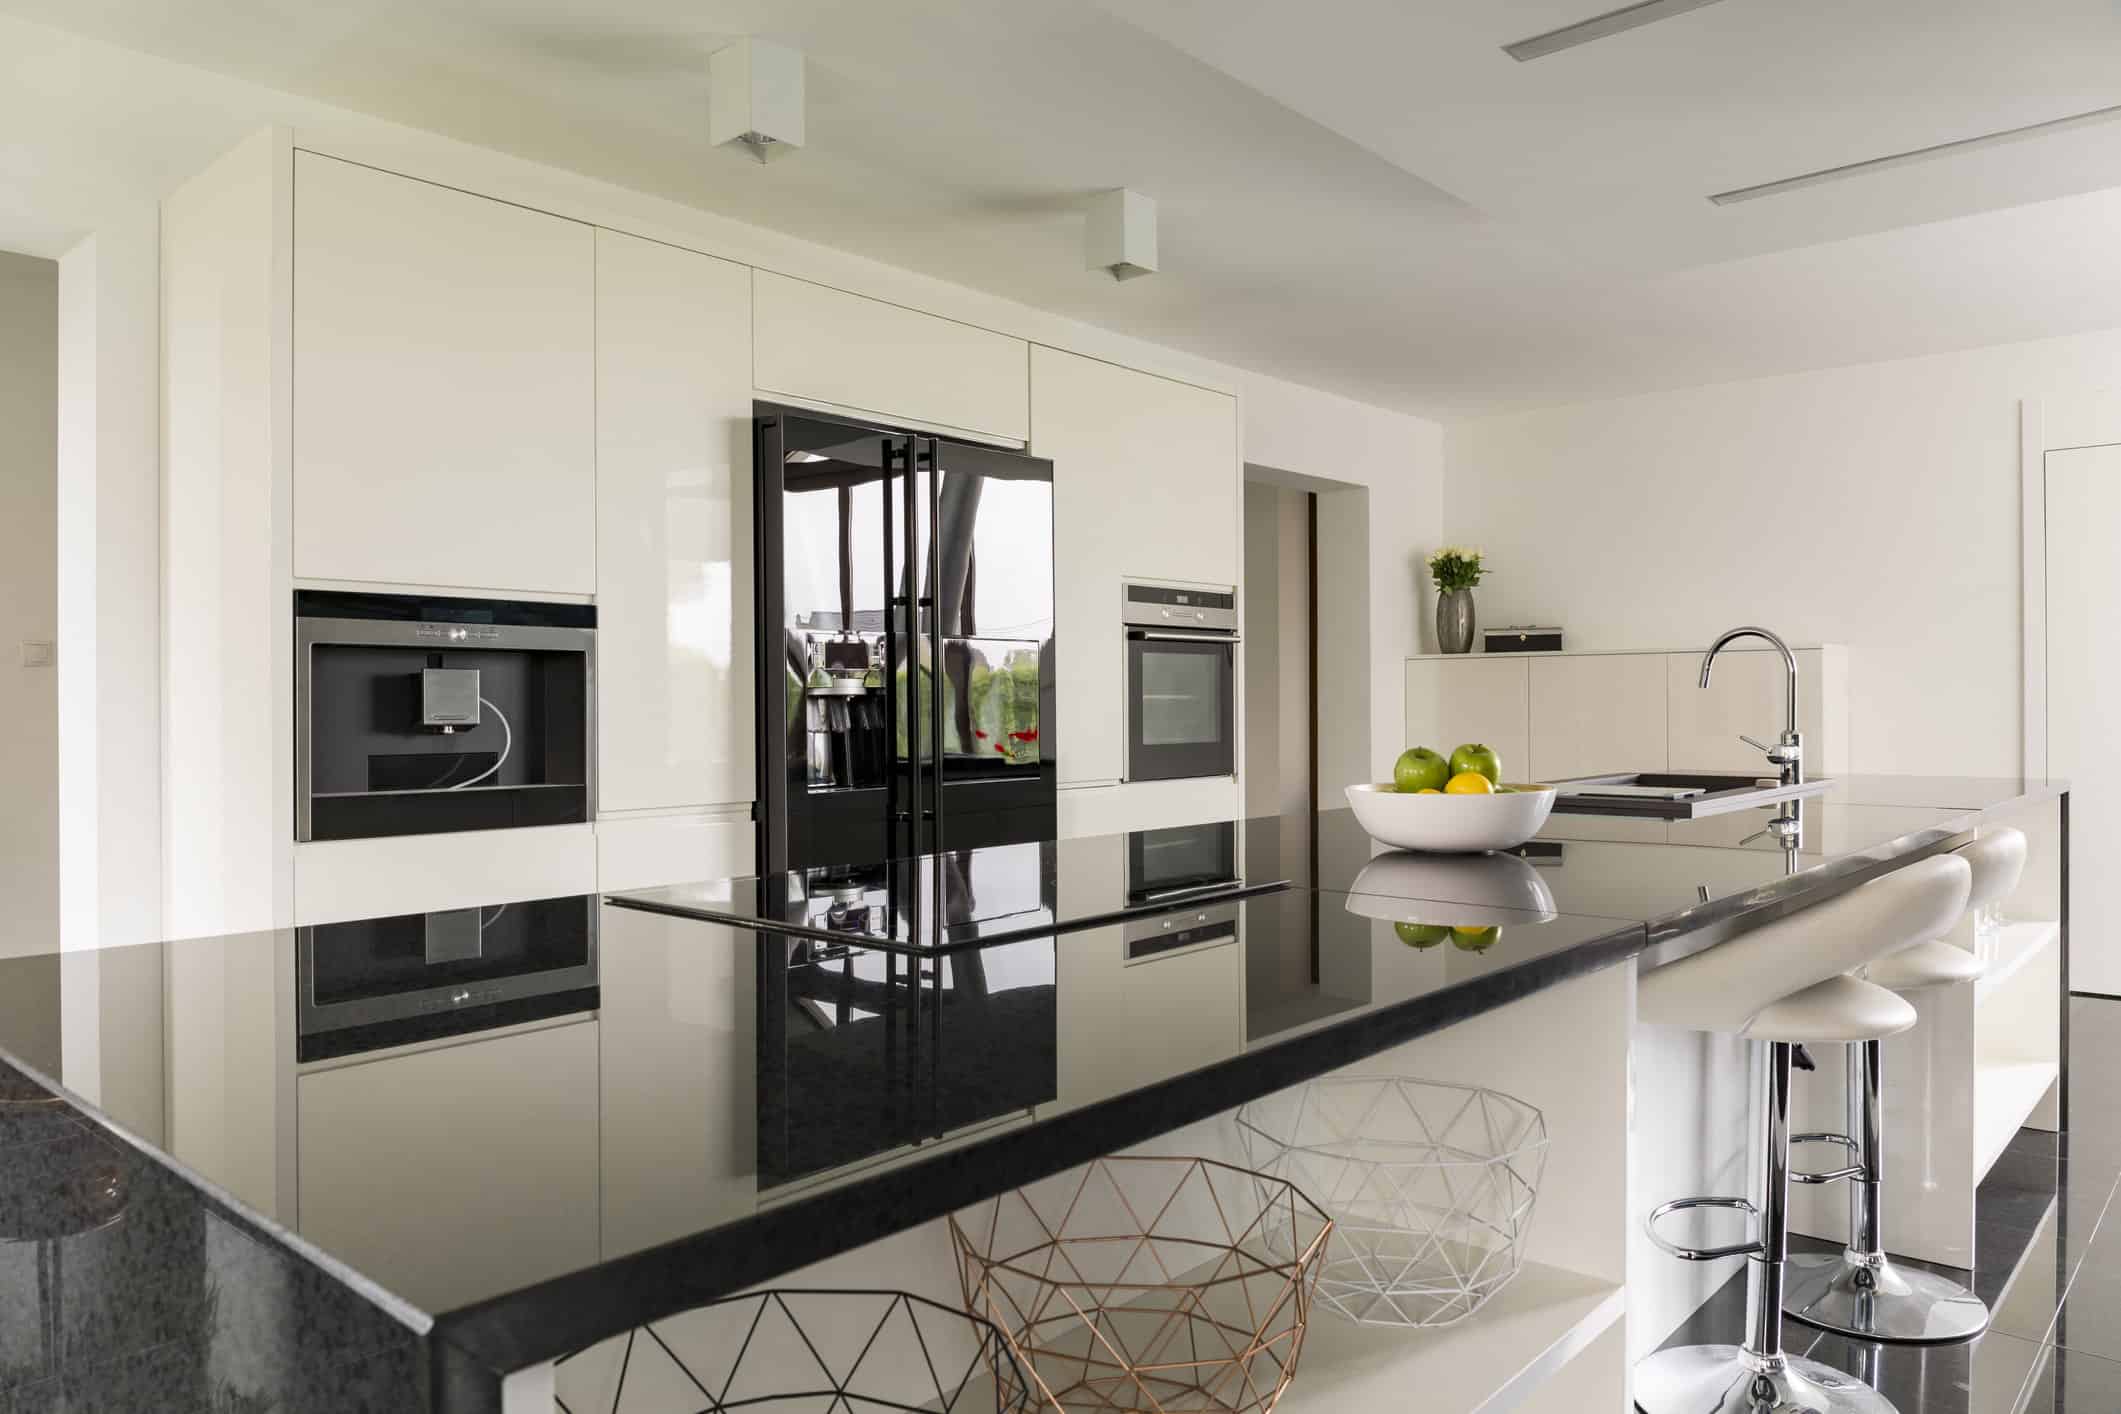 Kitchen island with marble wotktop in luxurious interior